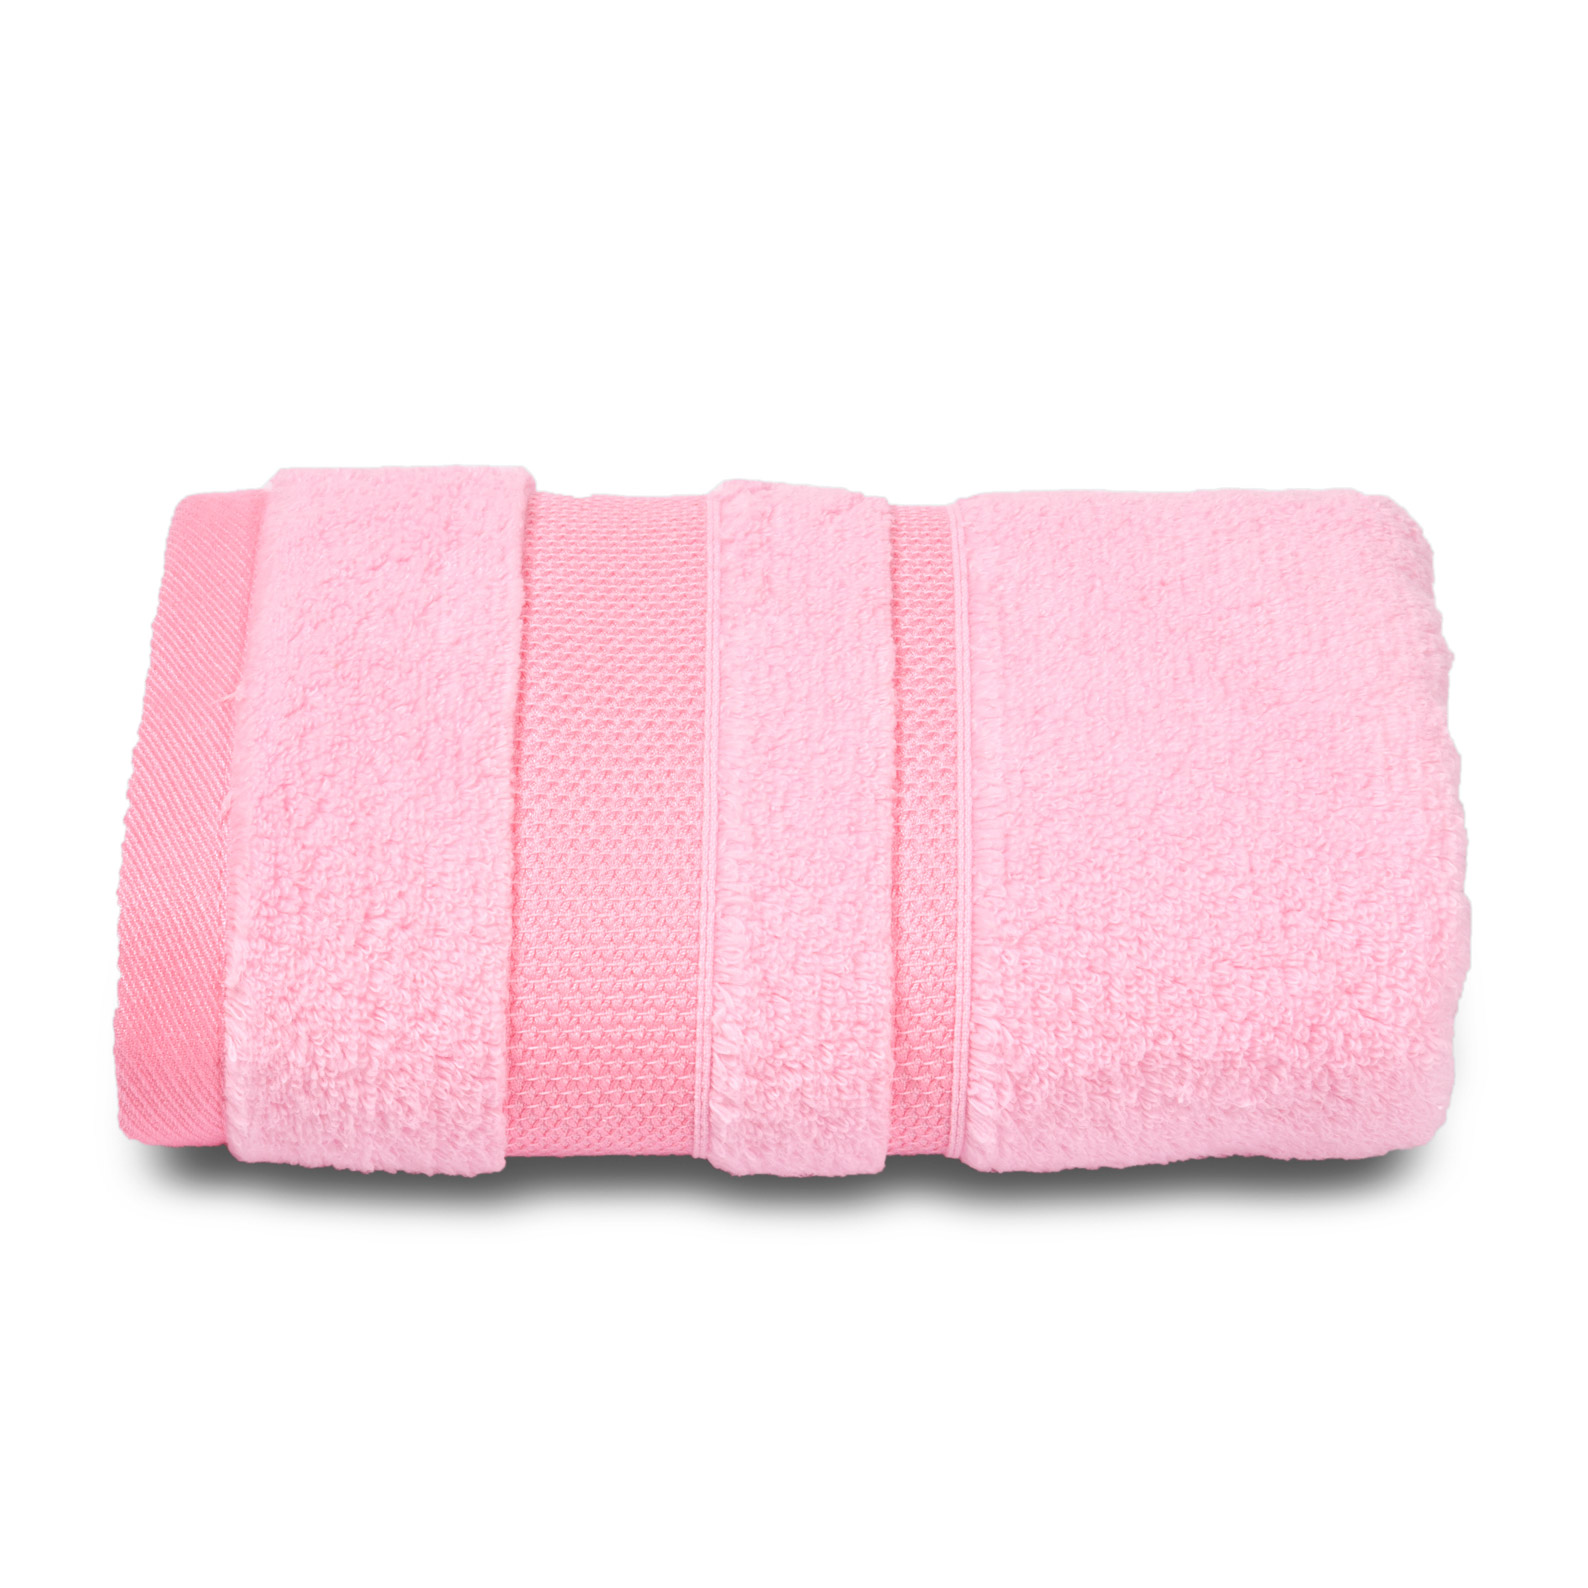 7007 247 ht полотенце cawo розовый 50x100 lifestyle Полотенце махровое Cleanelly perfetto твист 50х100 розовый